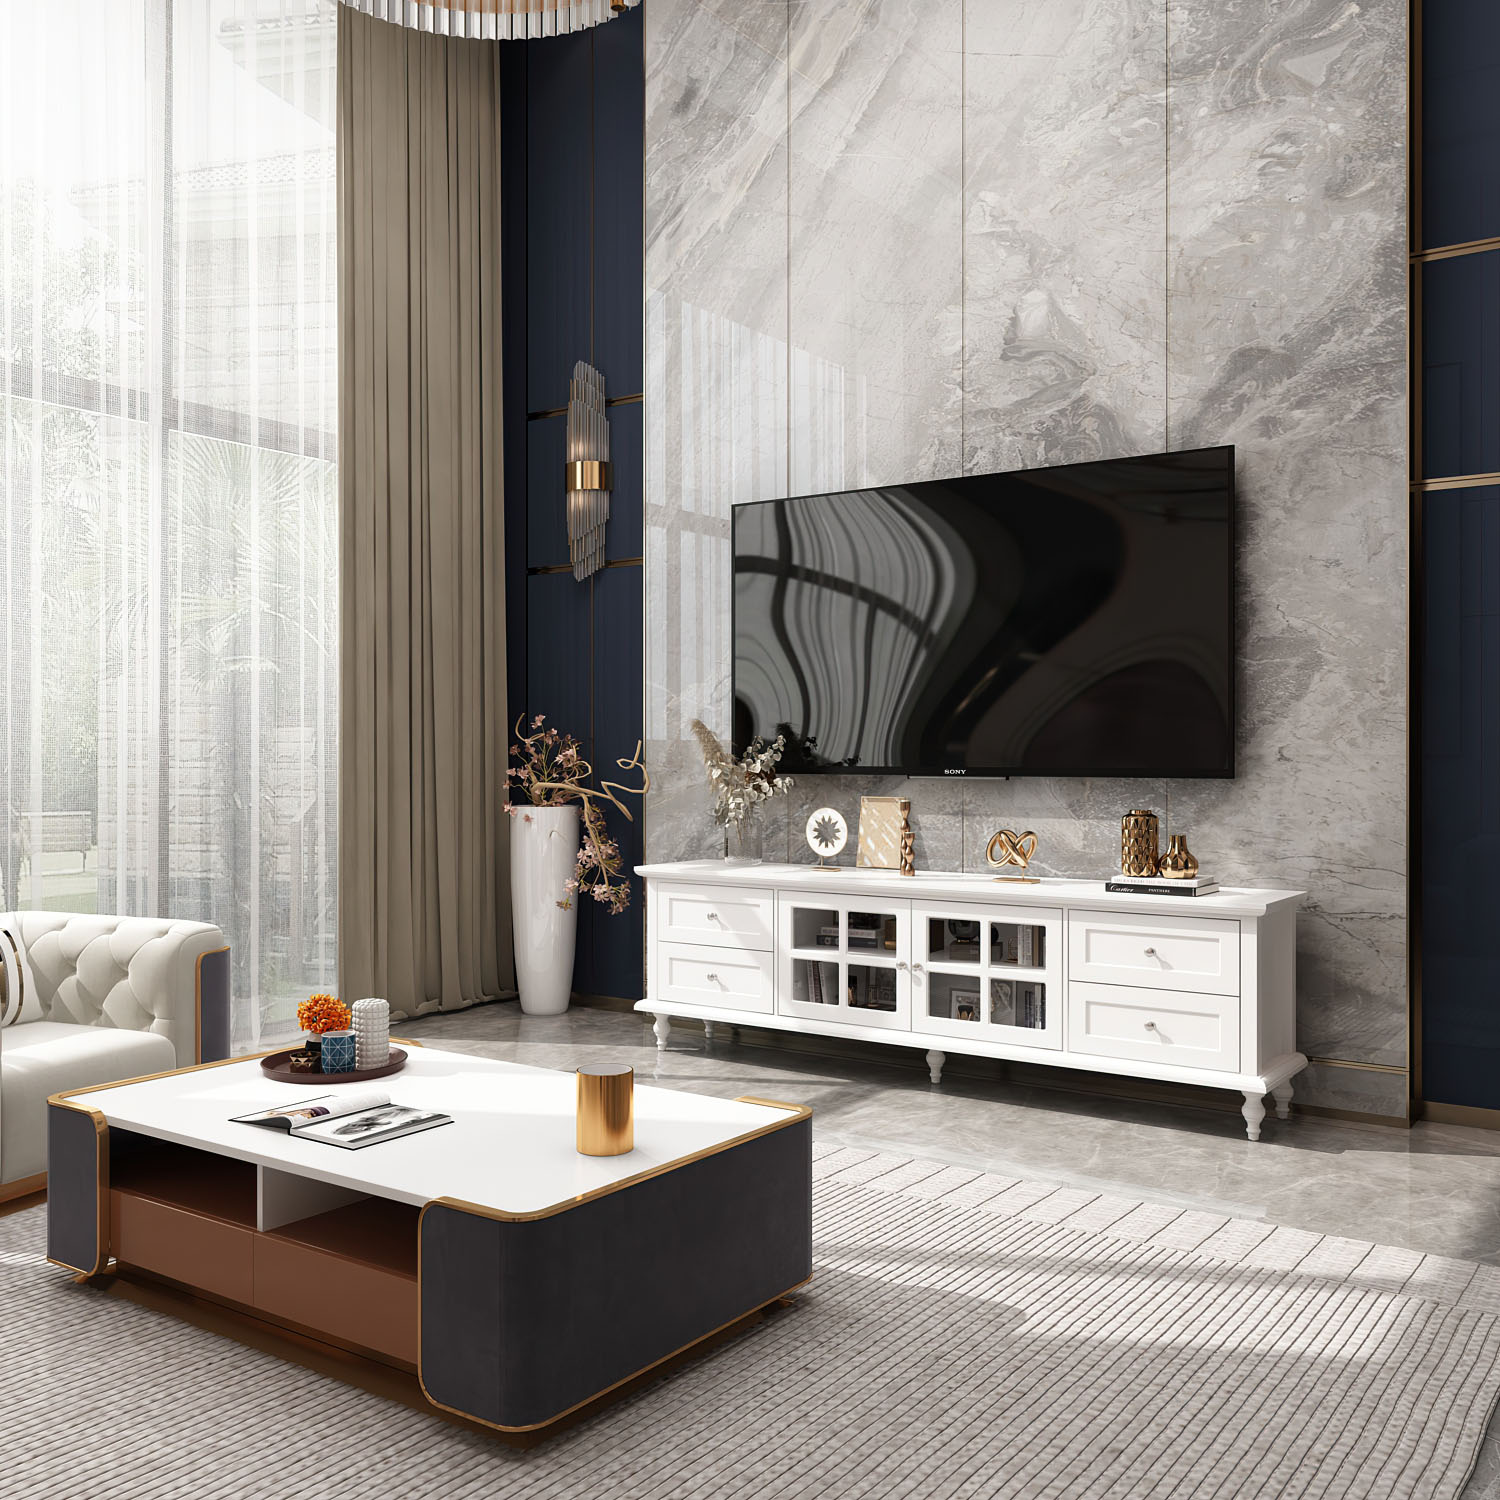 FUFU&GAGA Modern/Contemporary White Tv Cabinet (Accommodates TVs